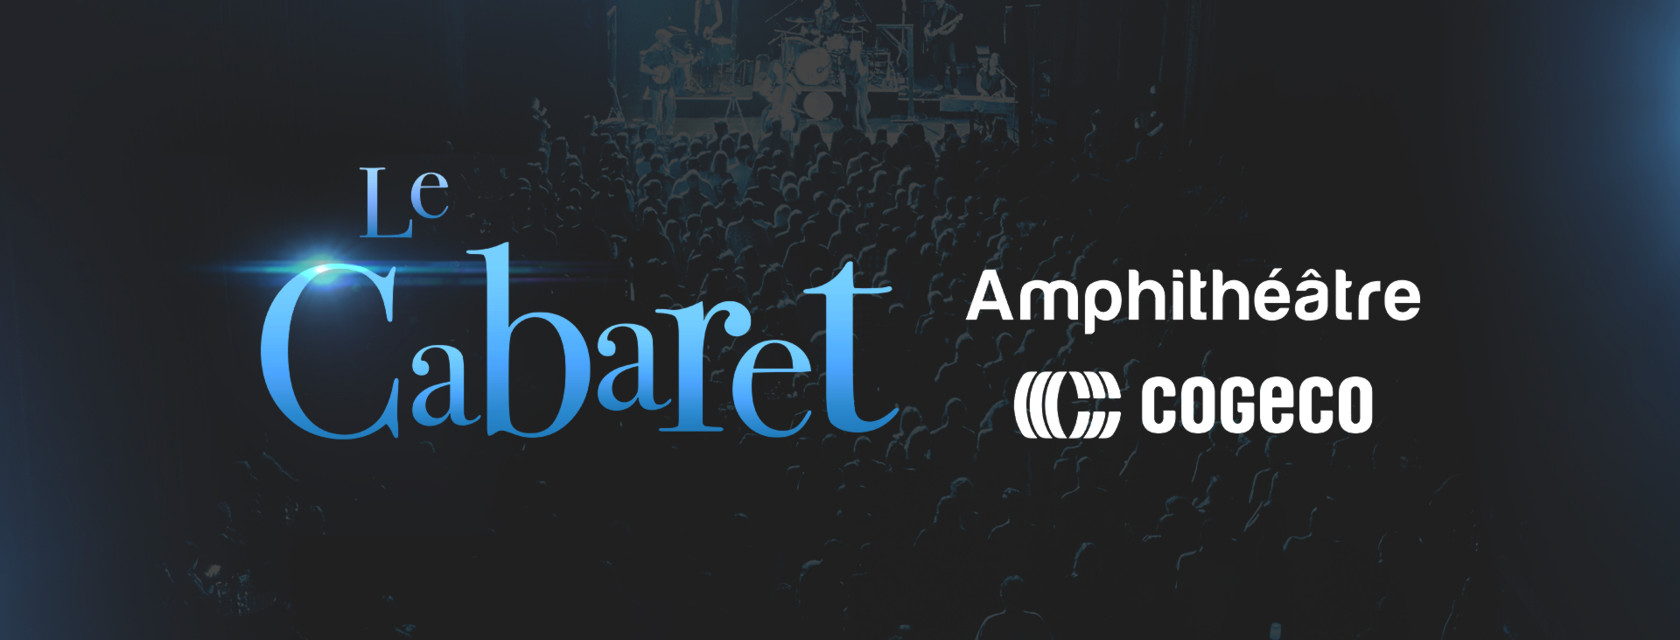 Addition to the program of Cogeco Amphitheatre Cabaret